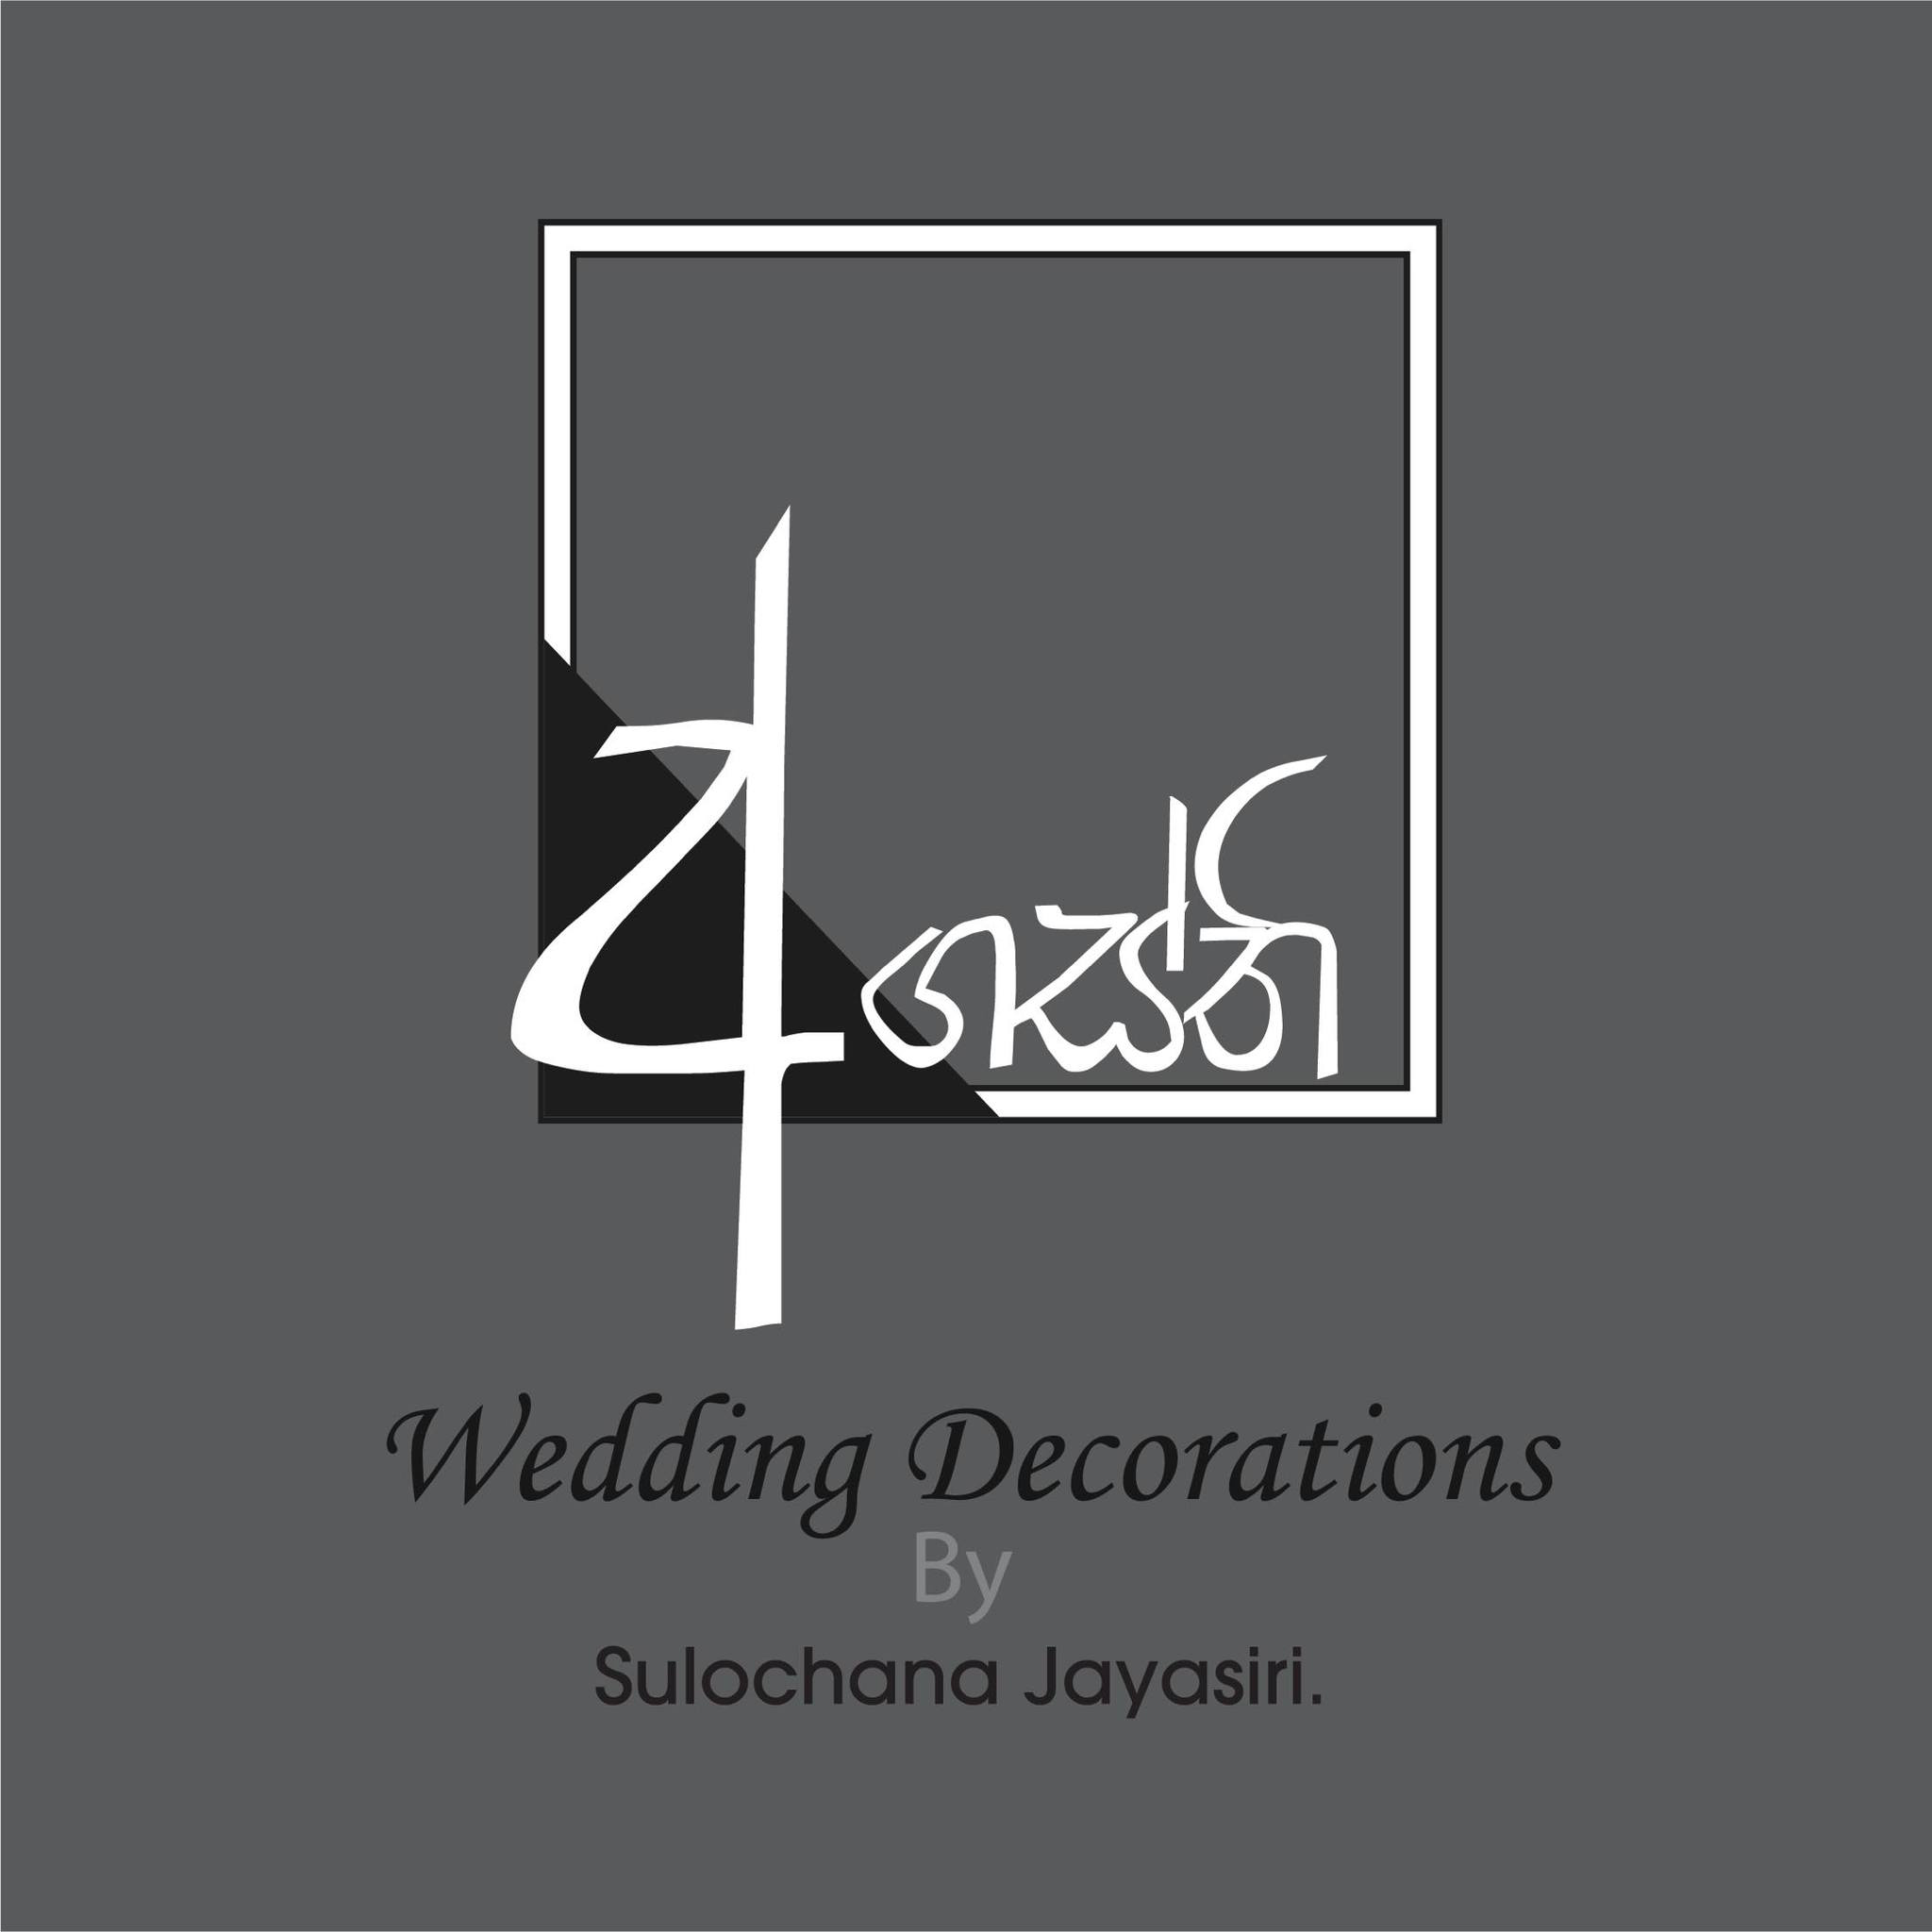 Agasthi Wedding Decorations